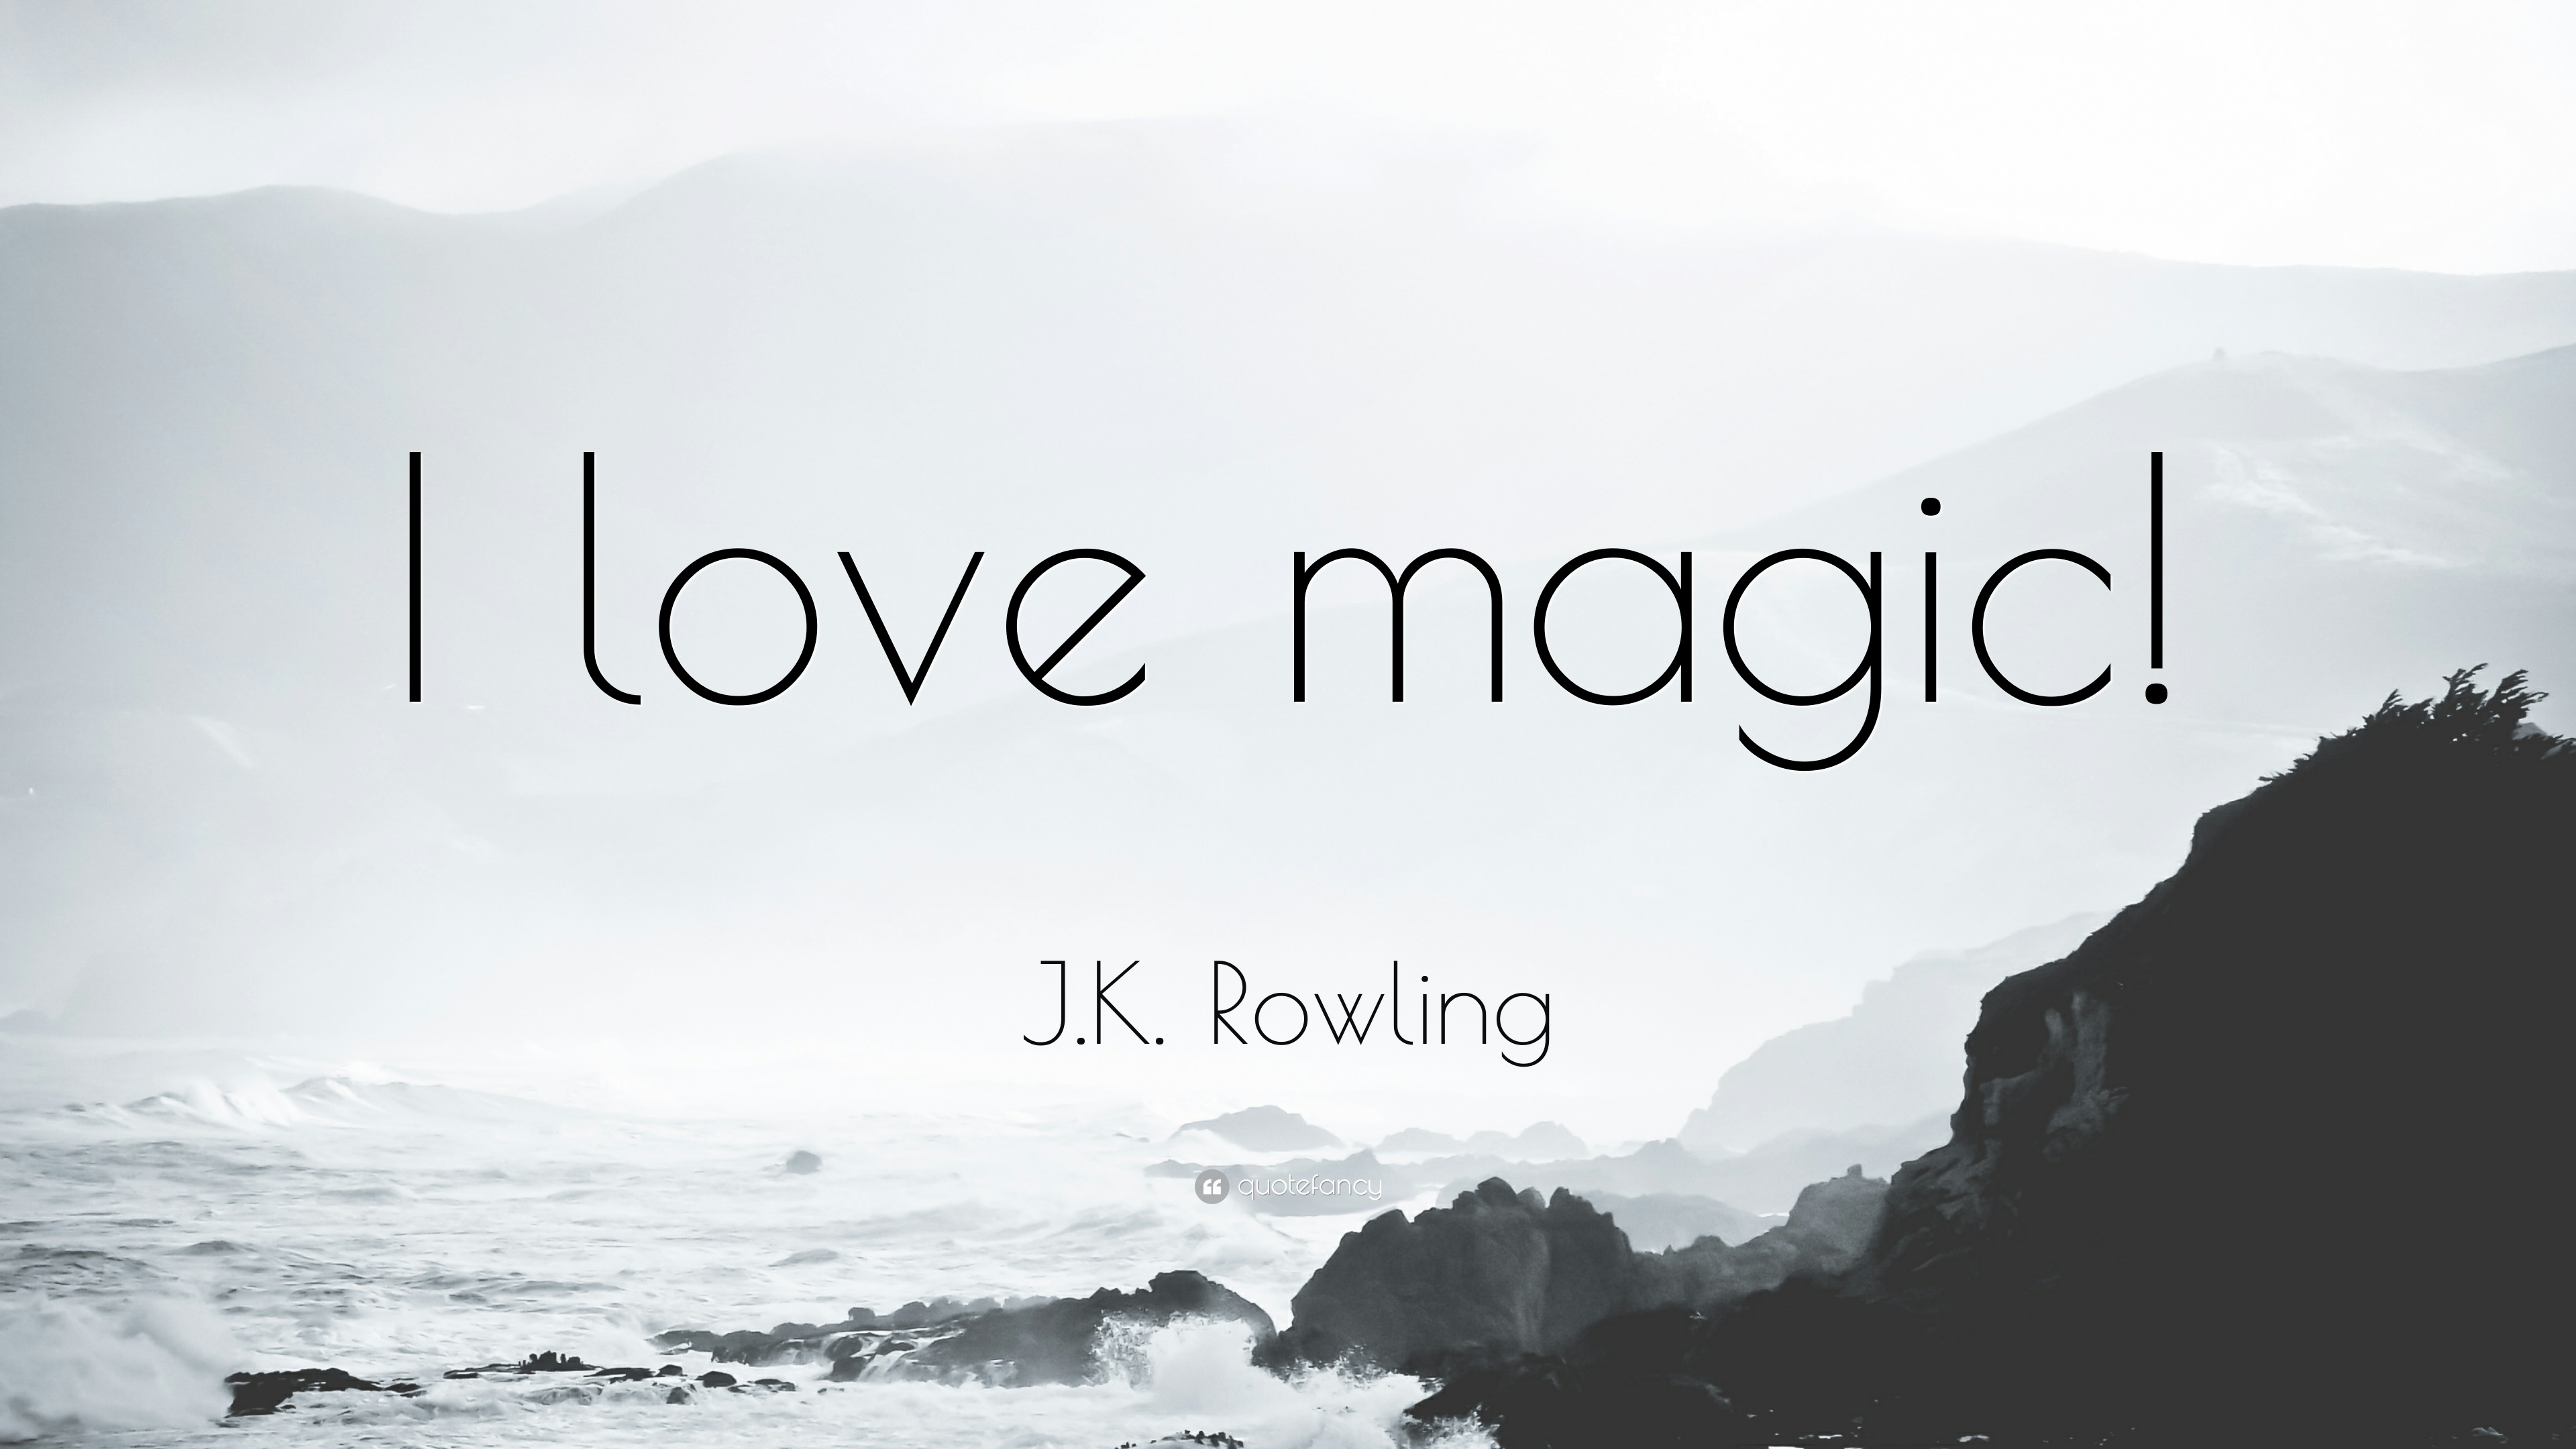 J.K. Rowling Quote: “I love magic!”